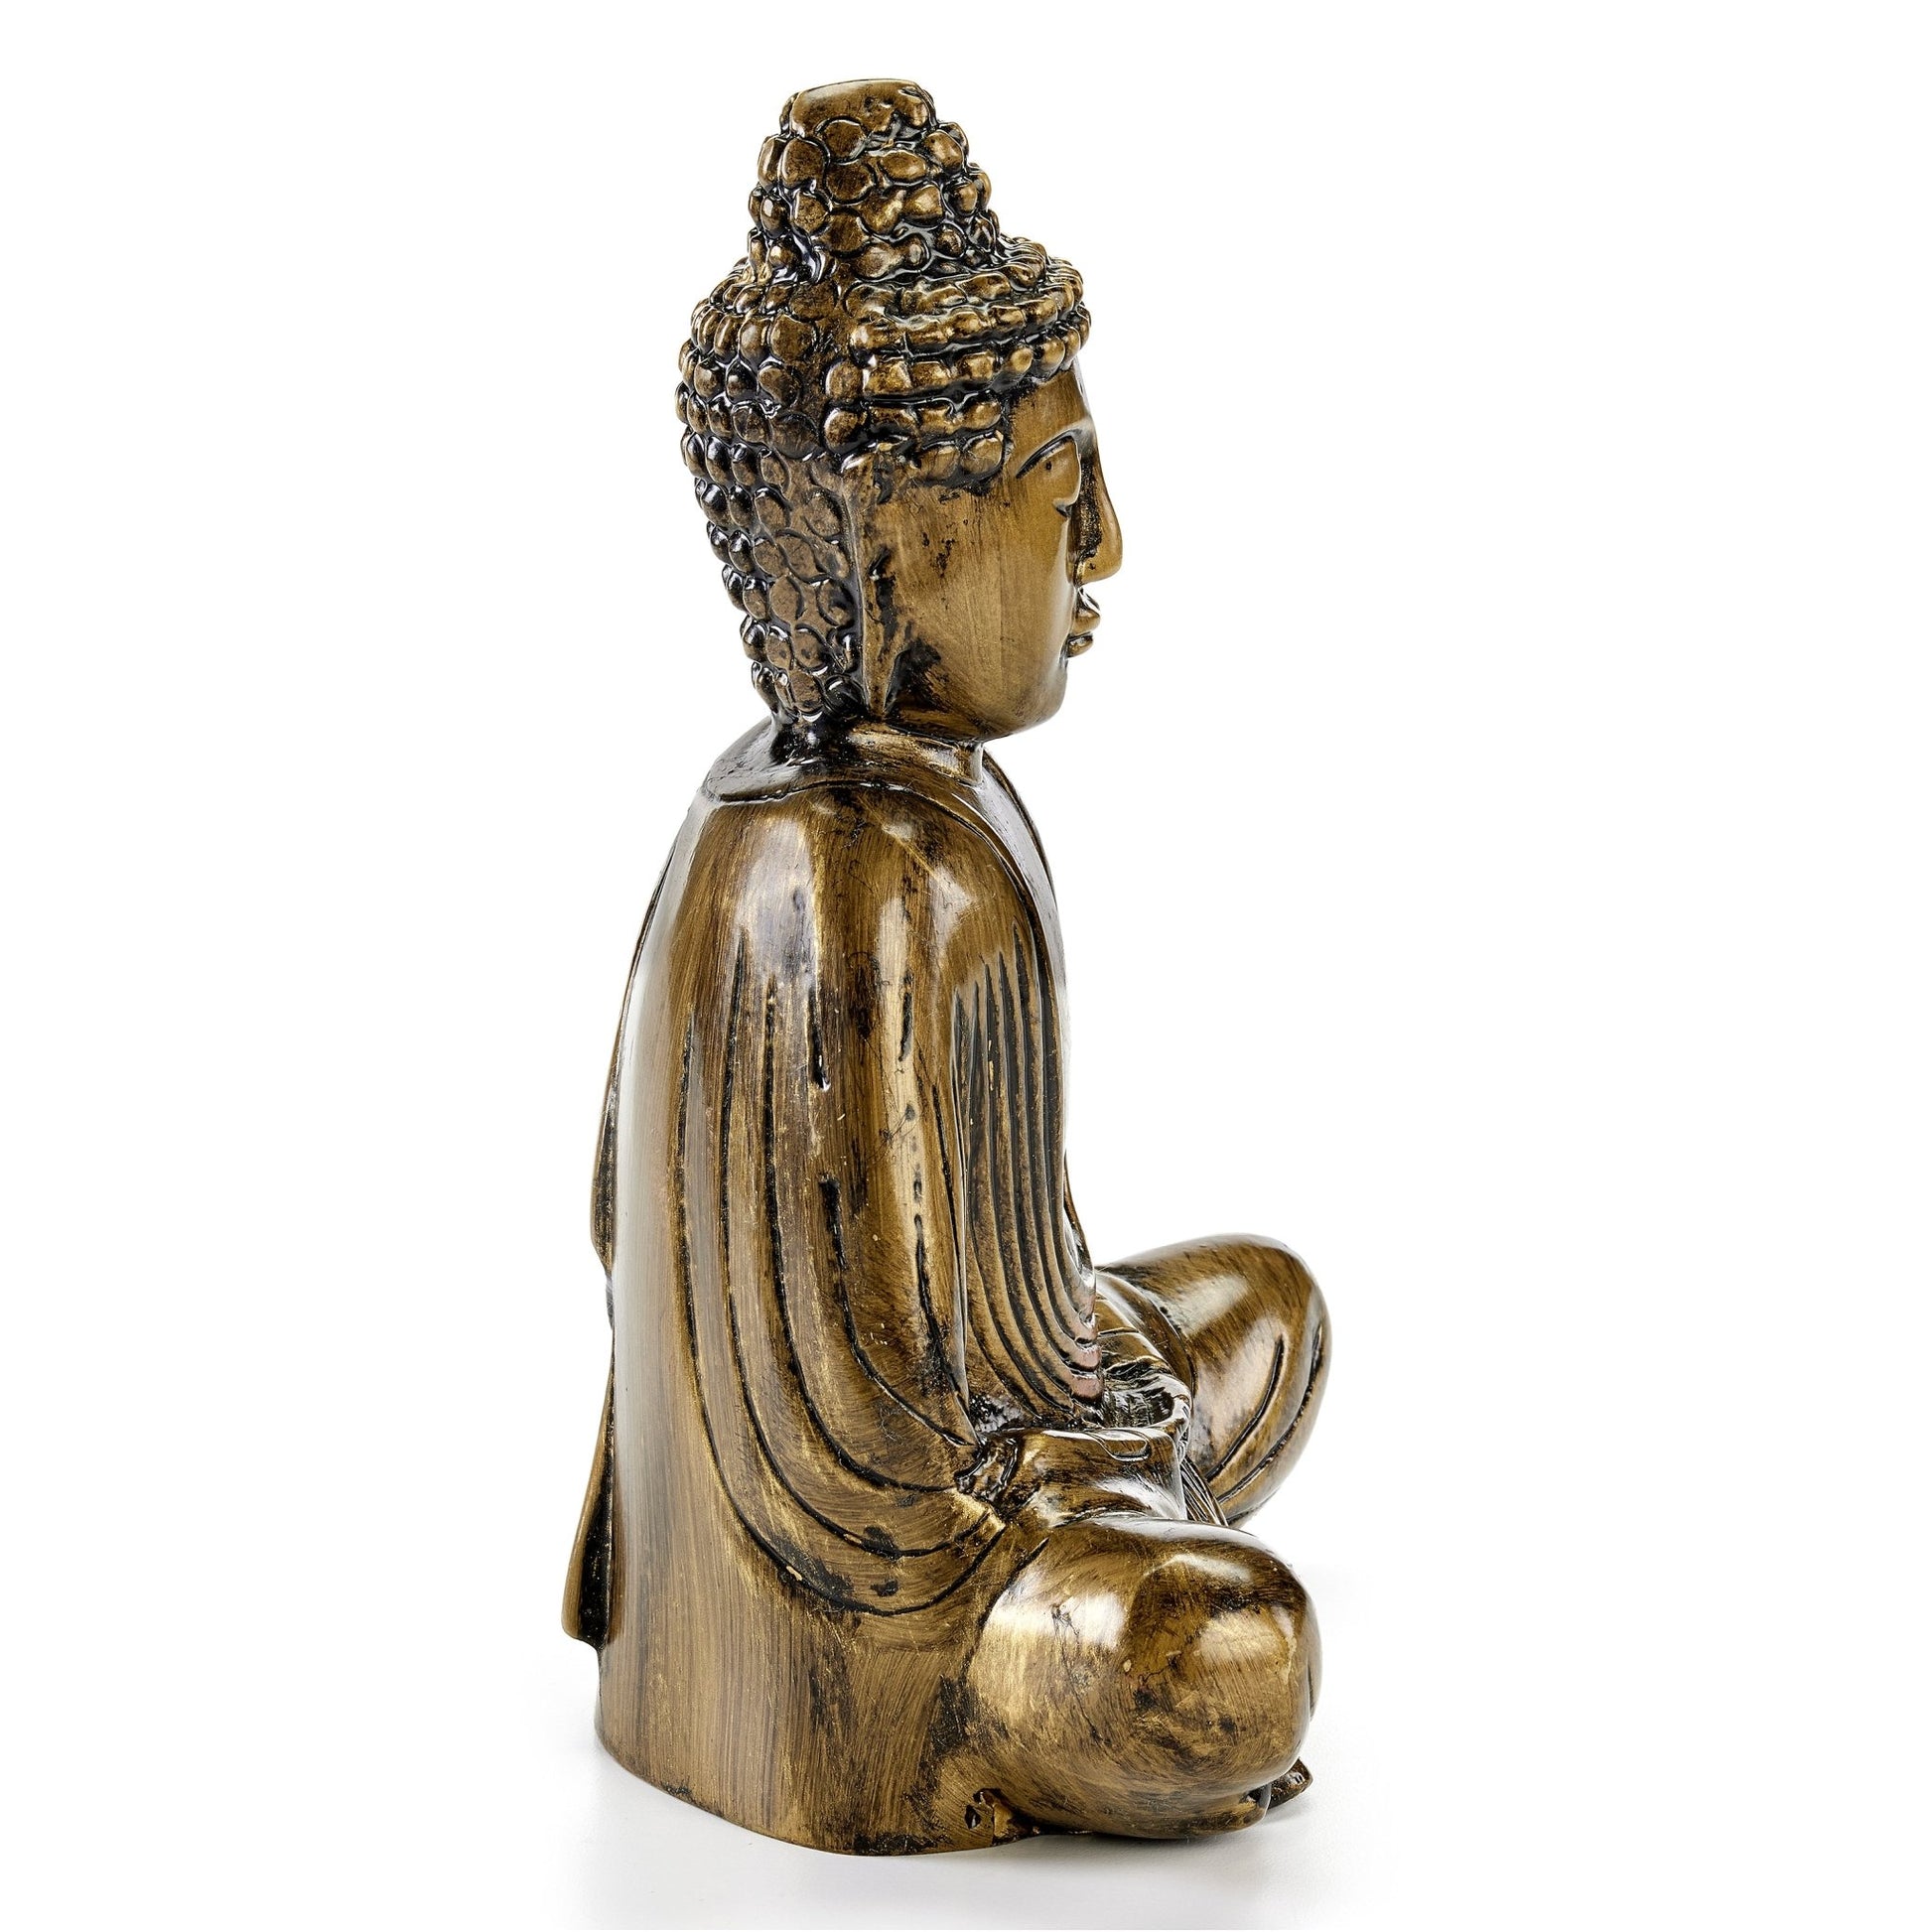 Meditating Buddha Decorative Statue - Good Directions